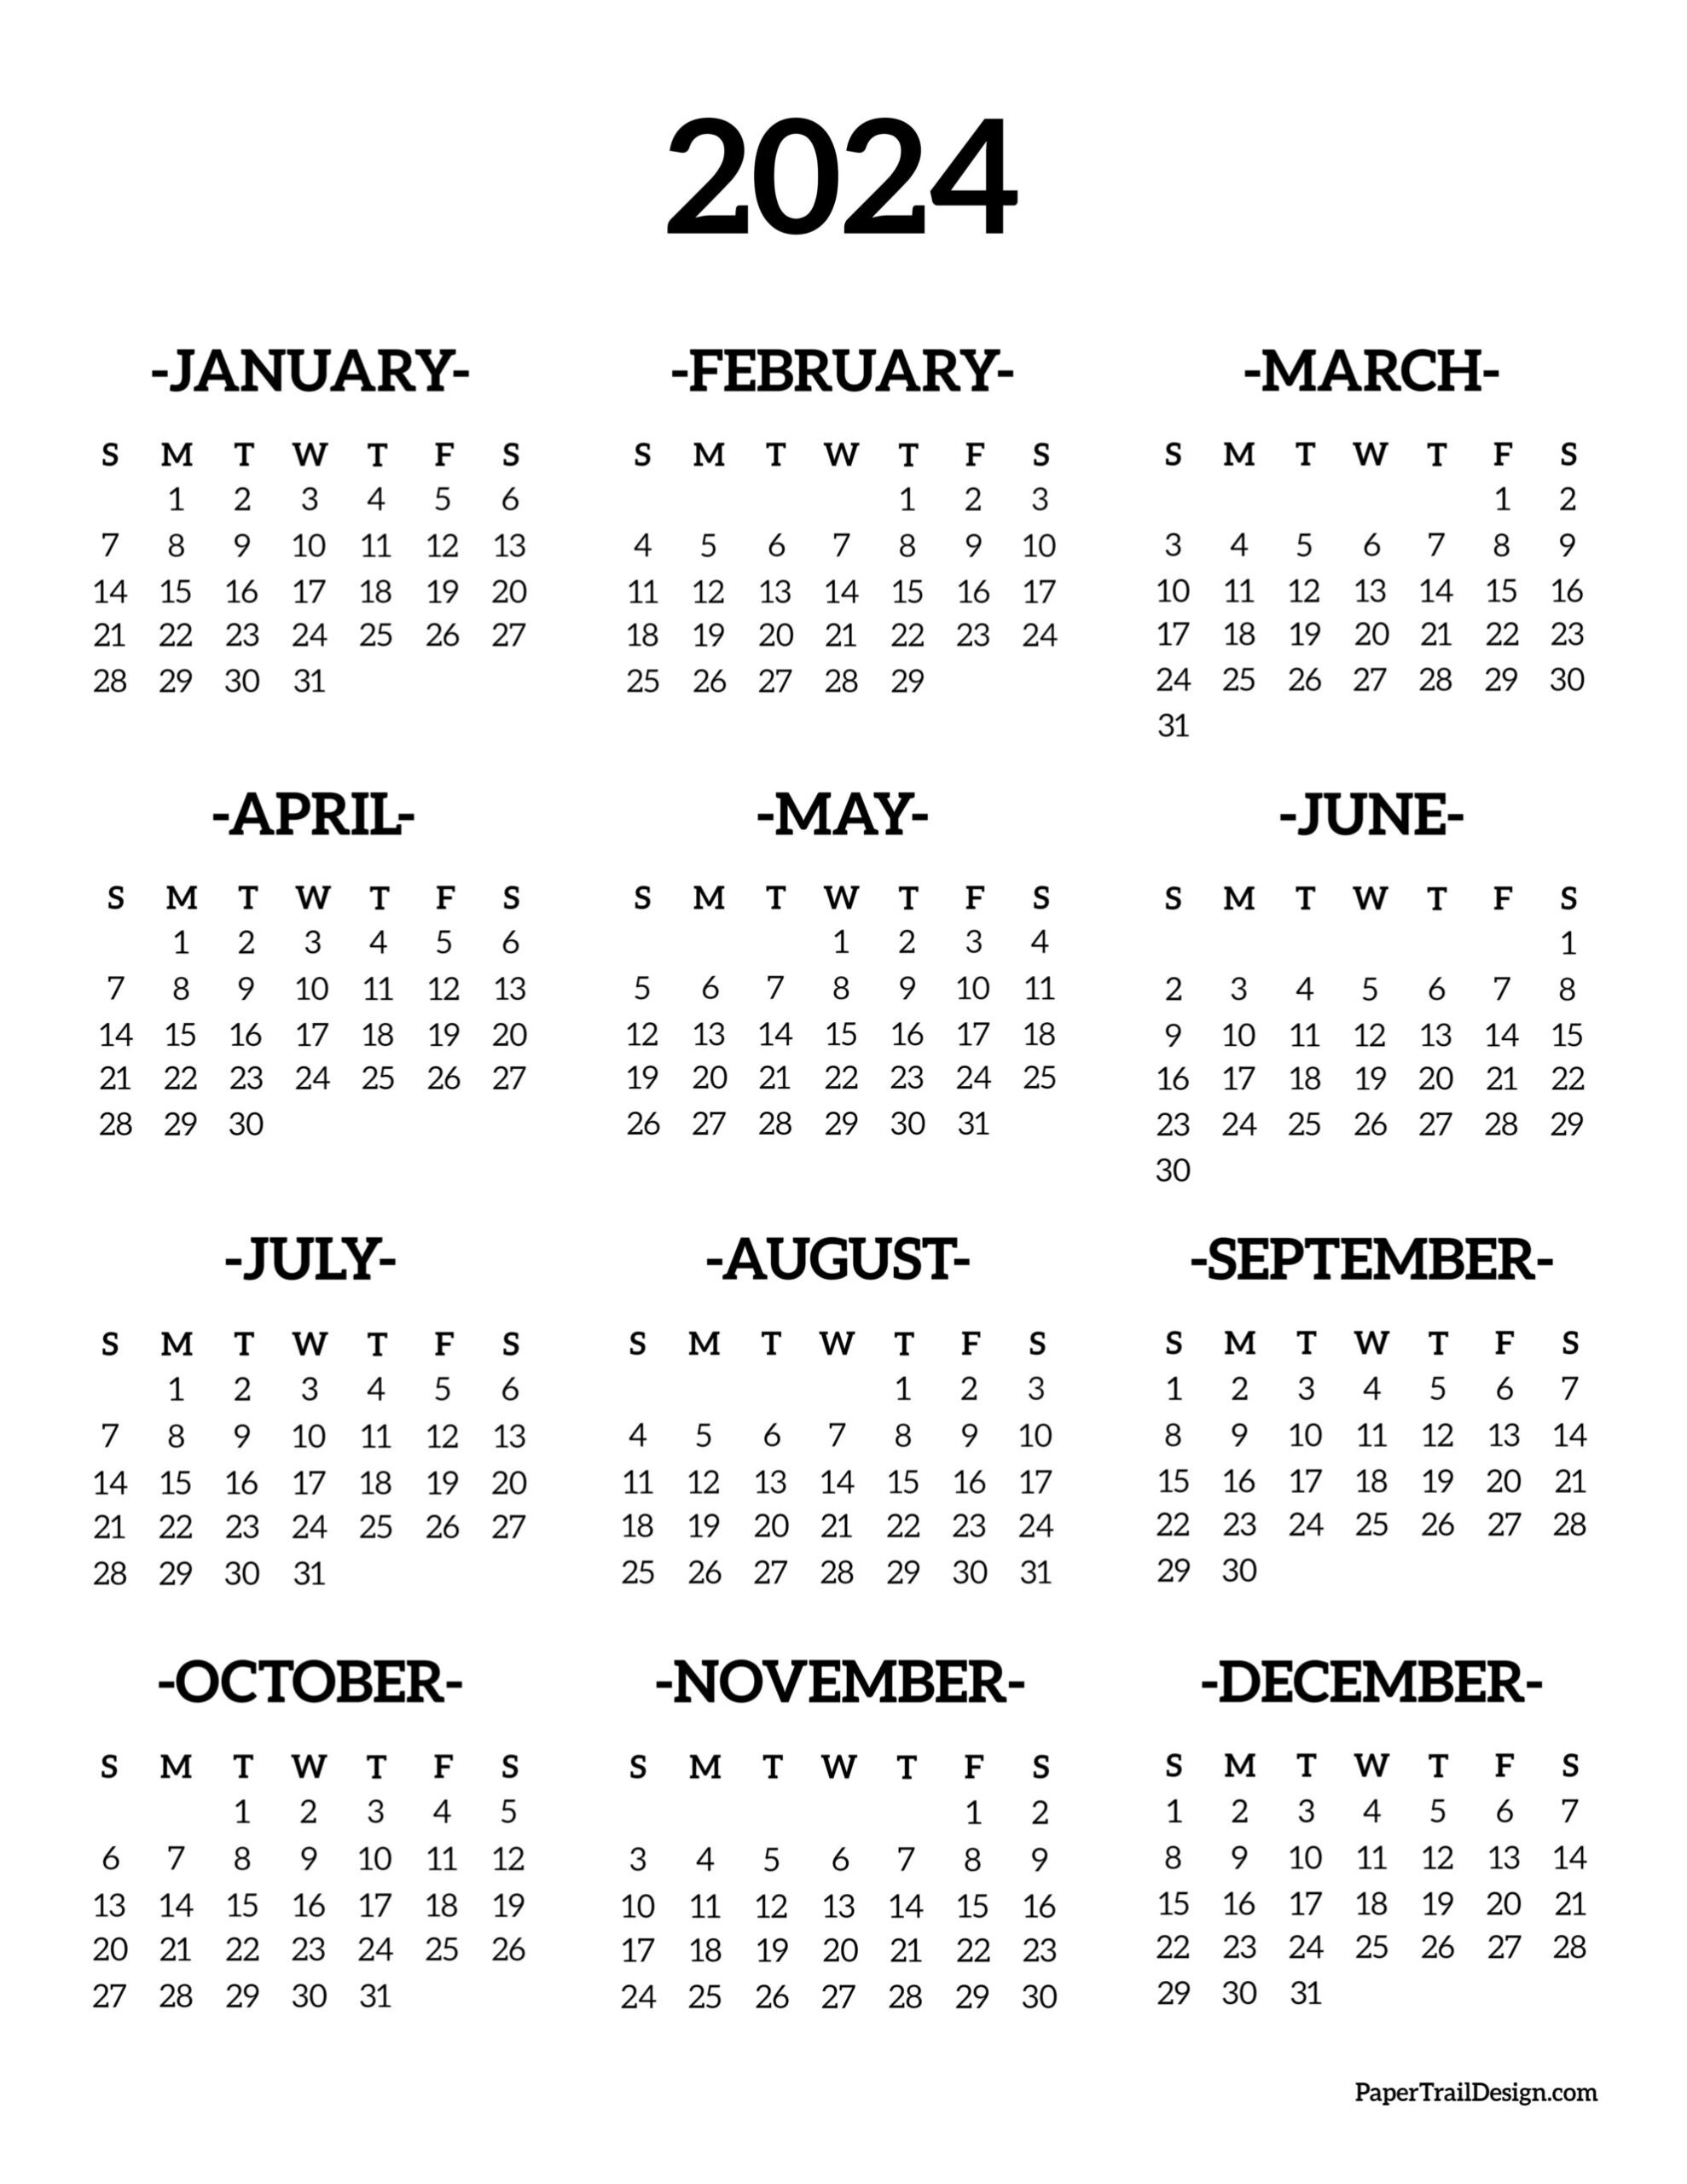 Calendar 2024 Printable One Page - Paper Trail Design | A Printable Calendar 2024